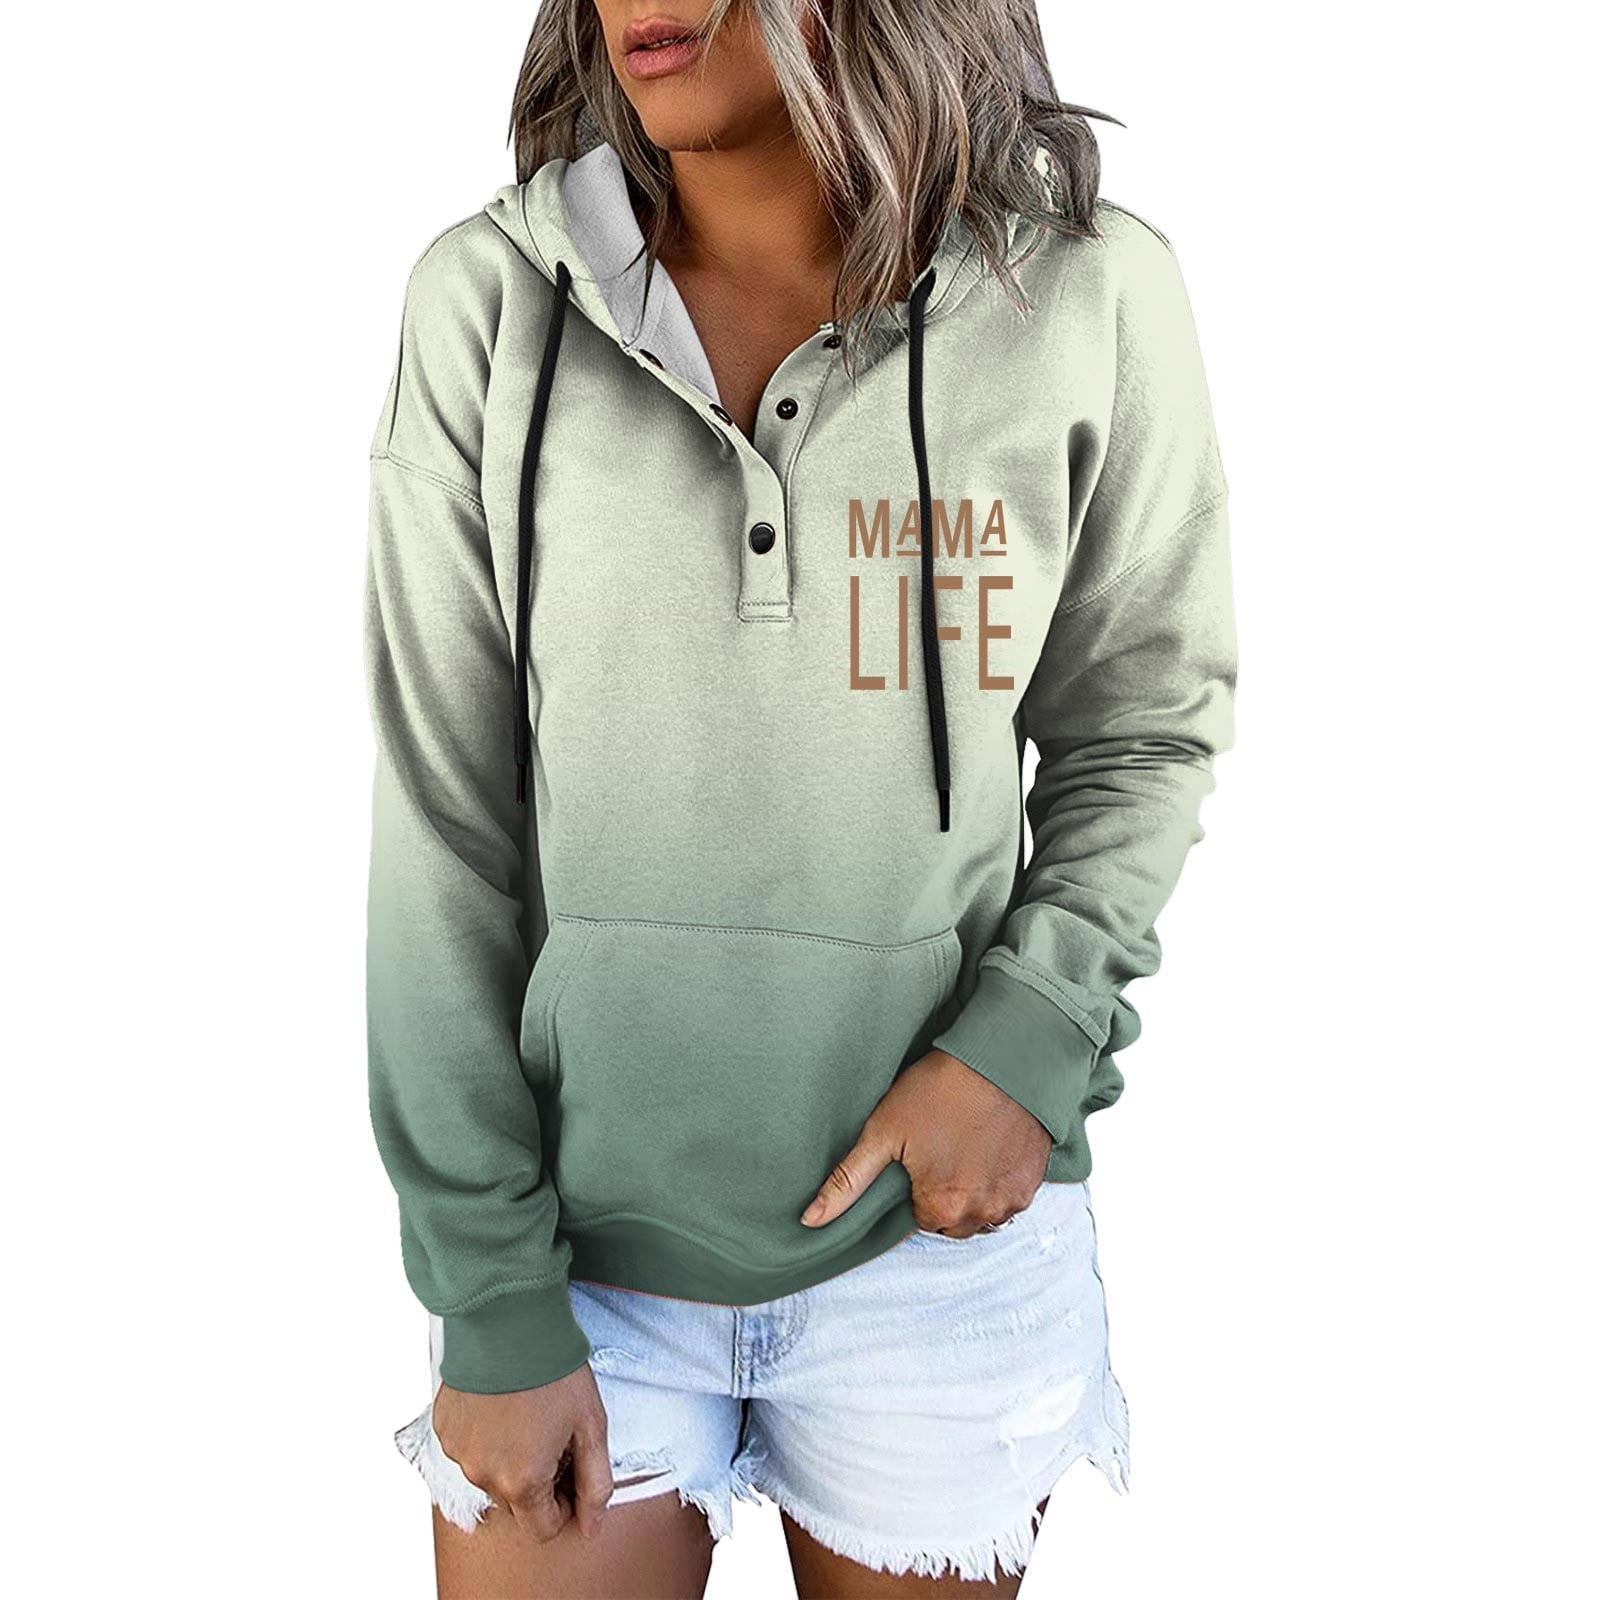 Shop Printed Sweatshirt with Long Sleeves and Hood Online